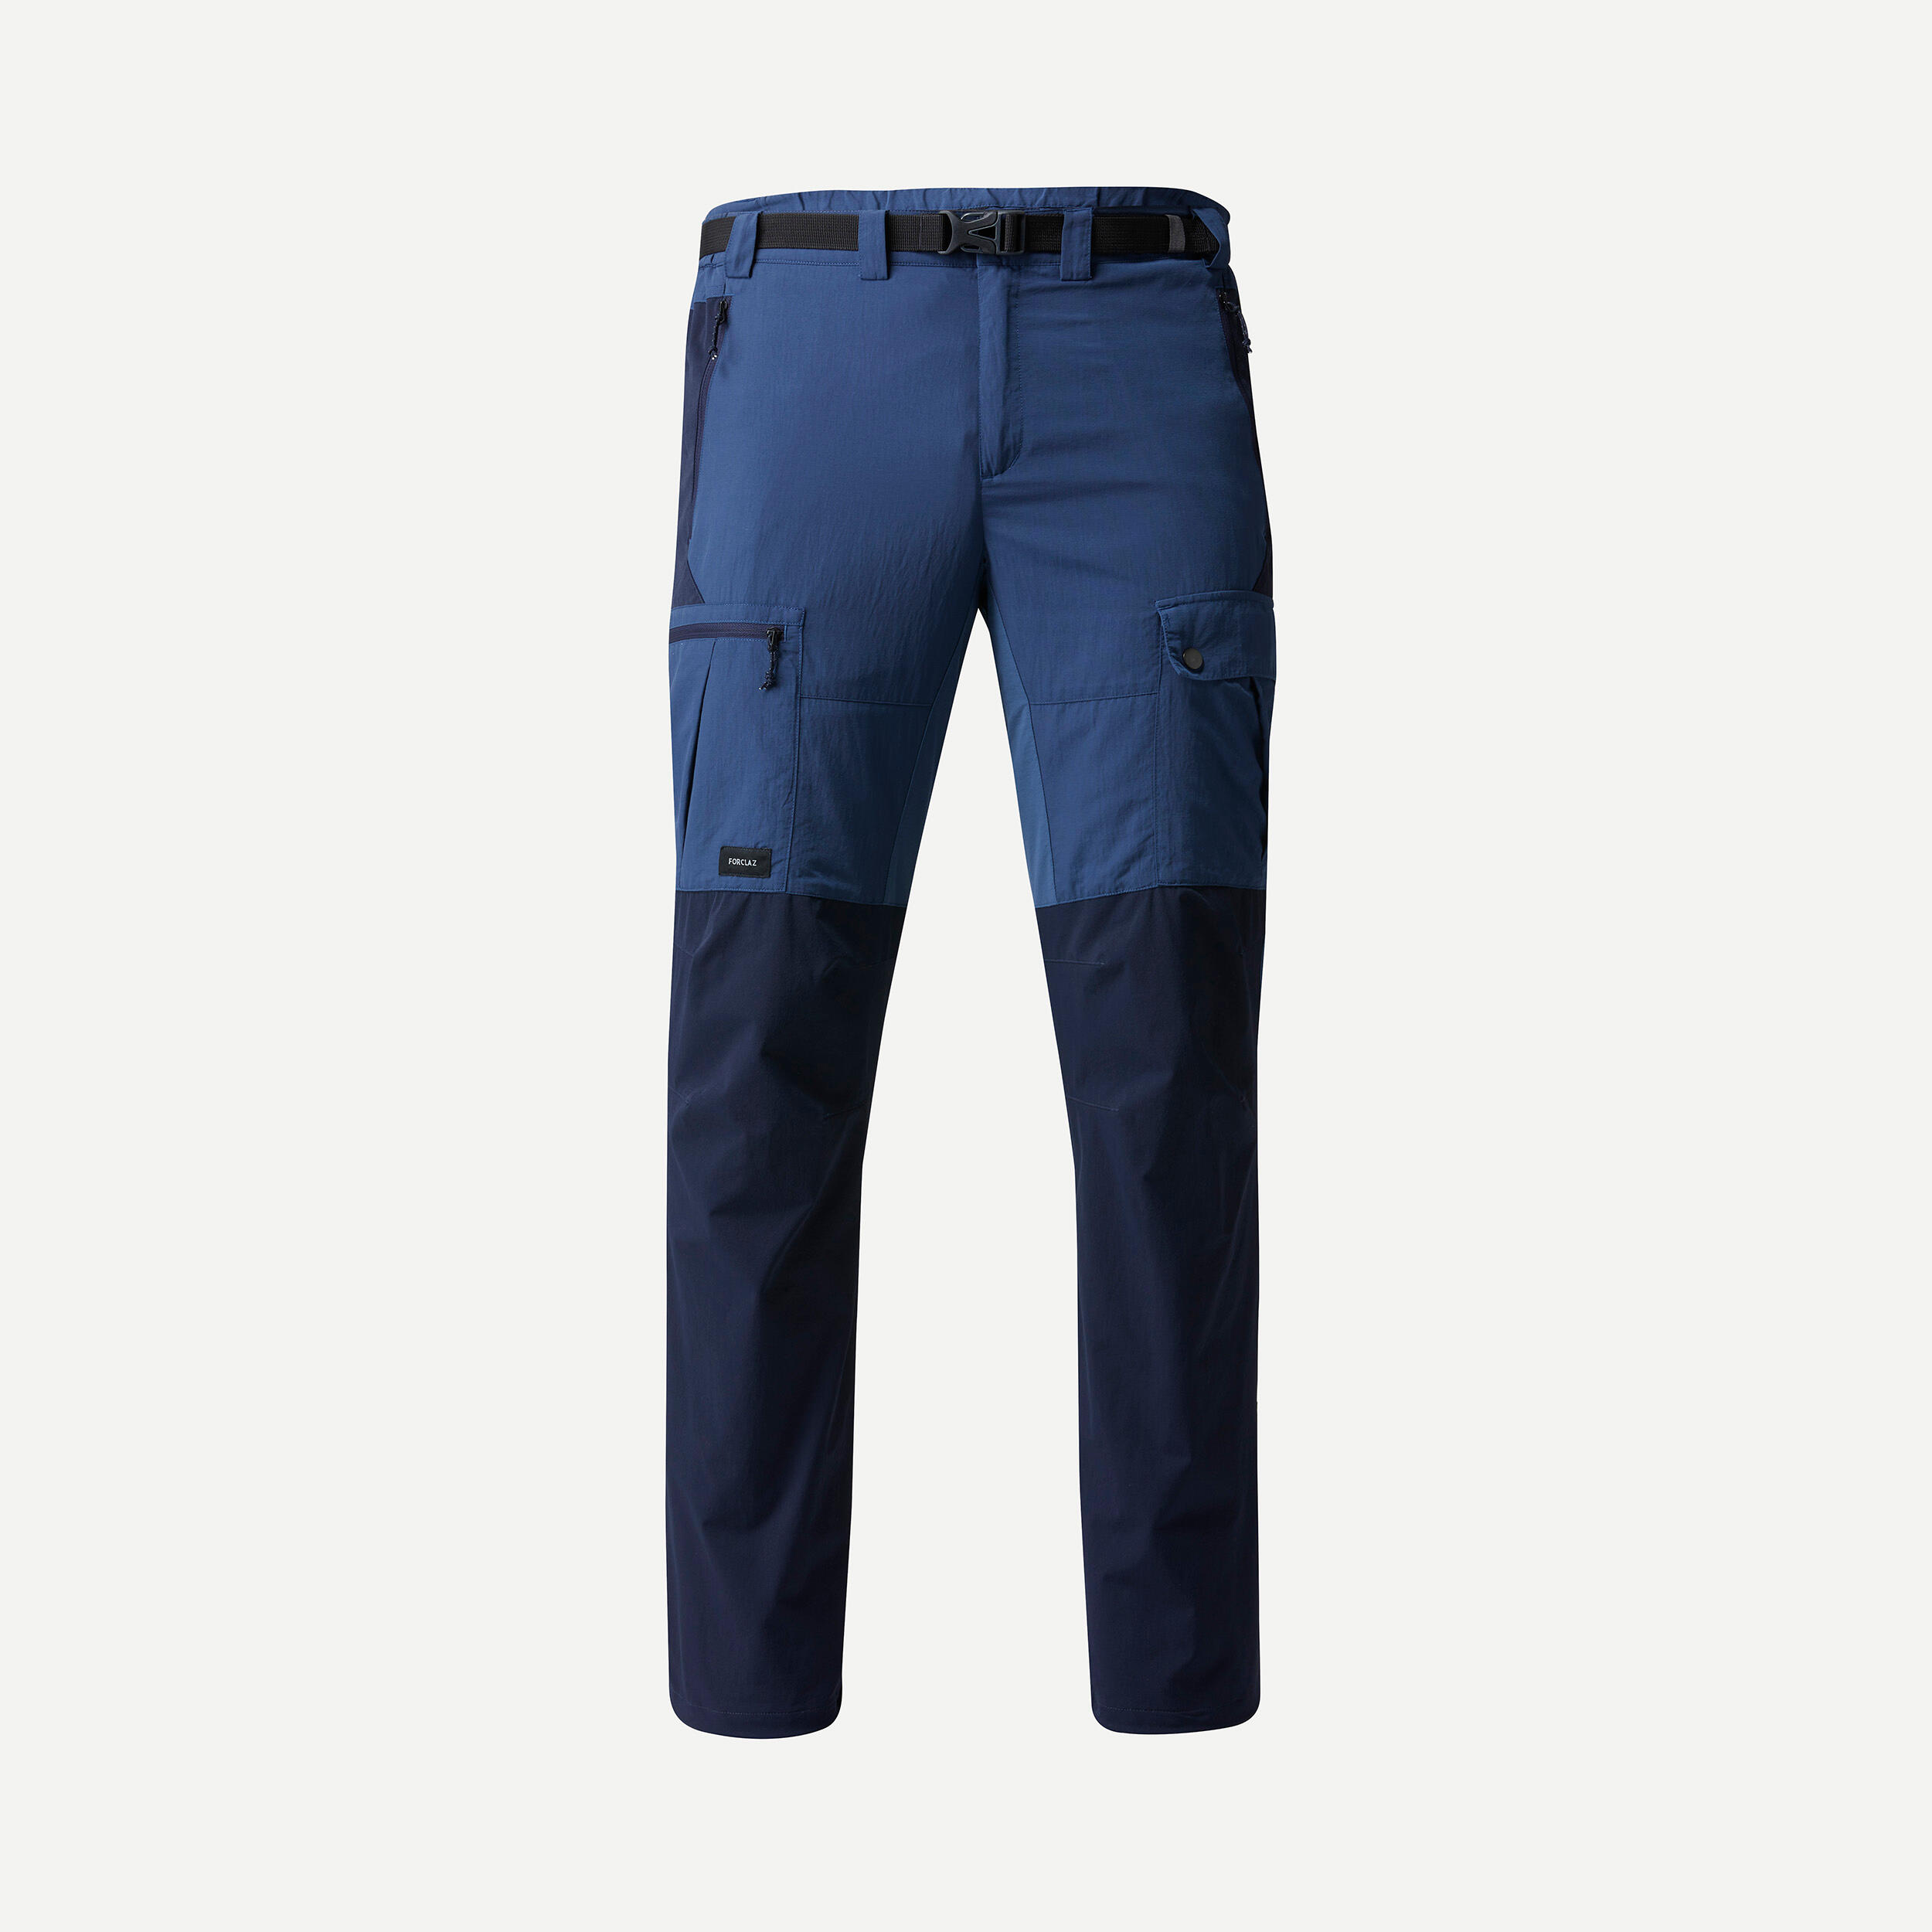 Men's Cargo Trousers Pants SG-900 - Khaki